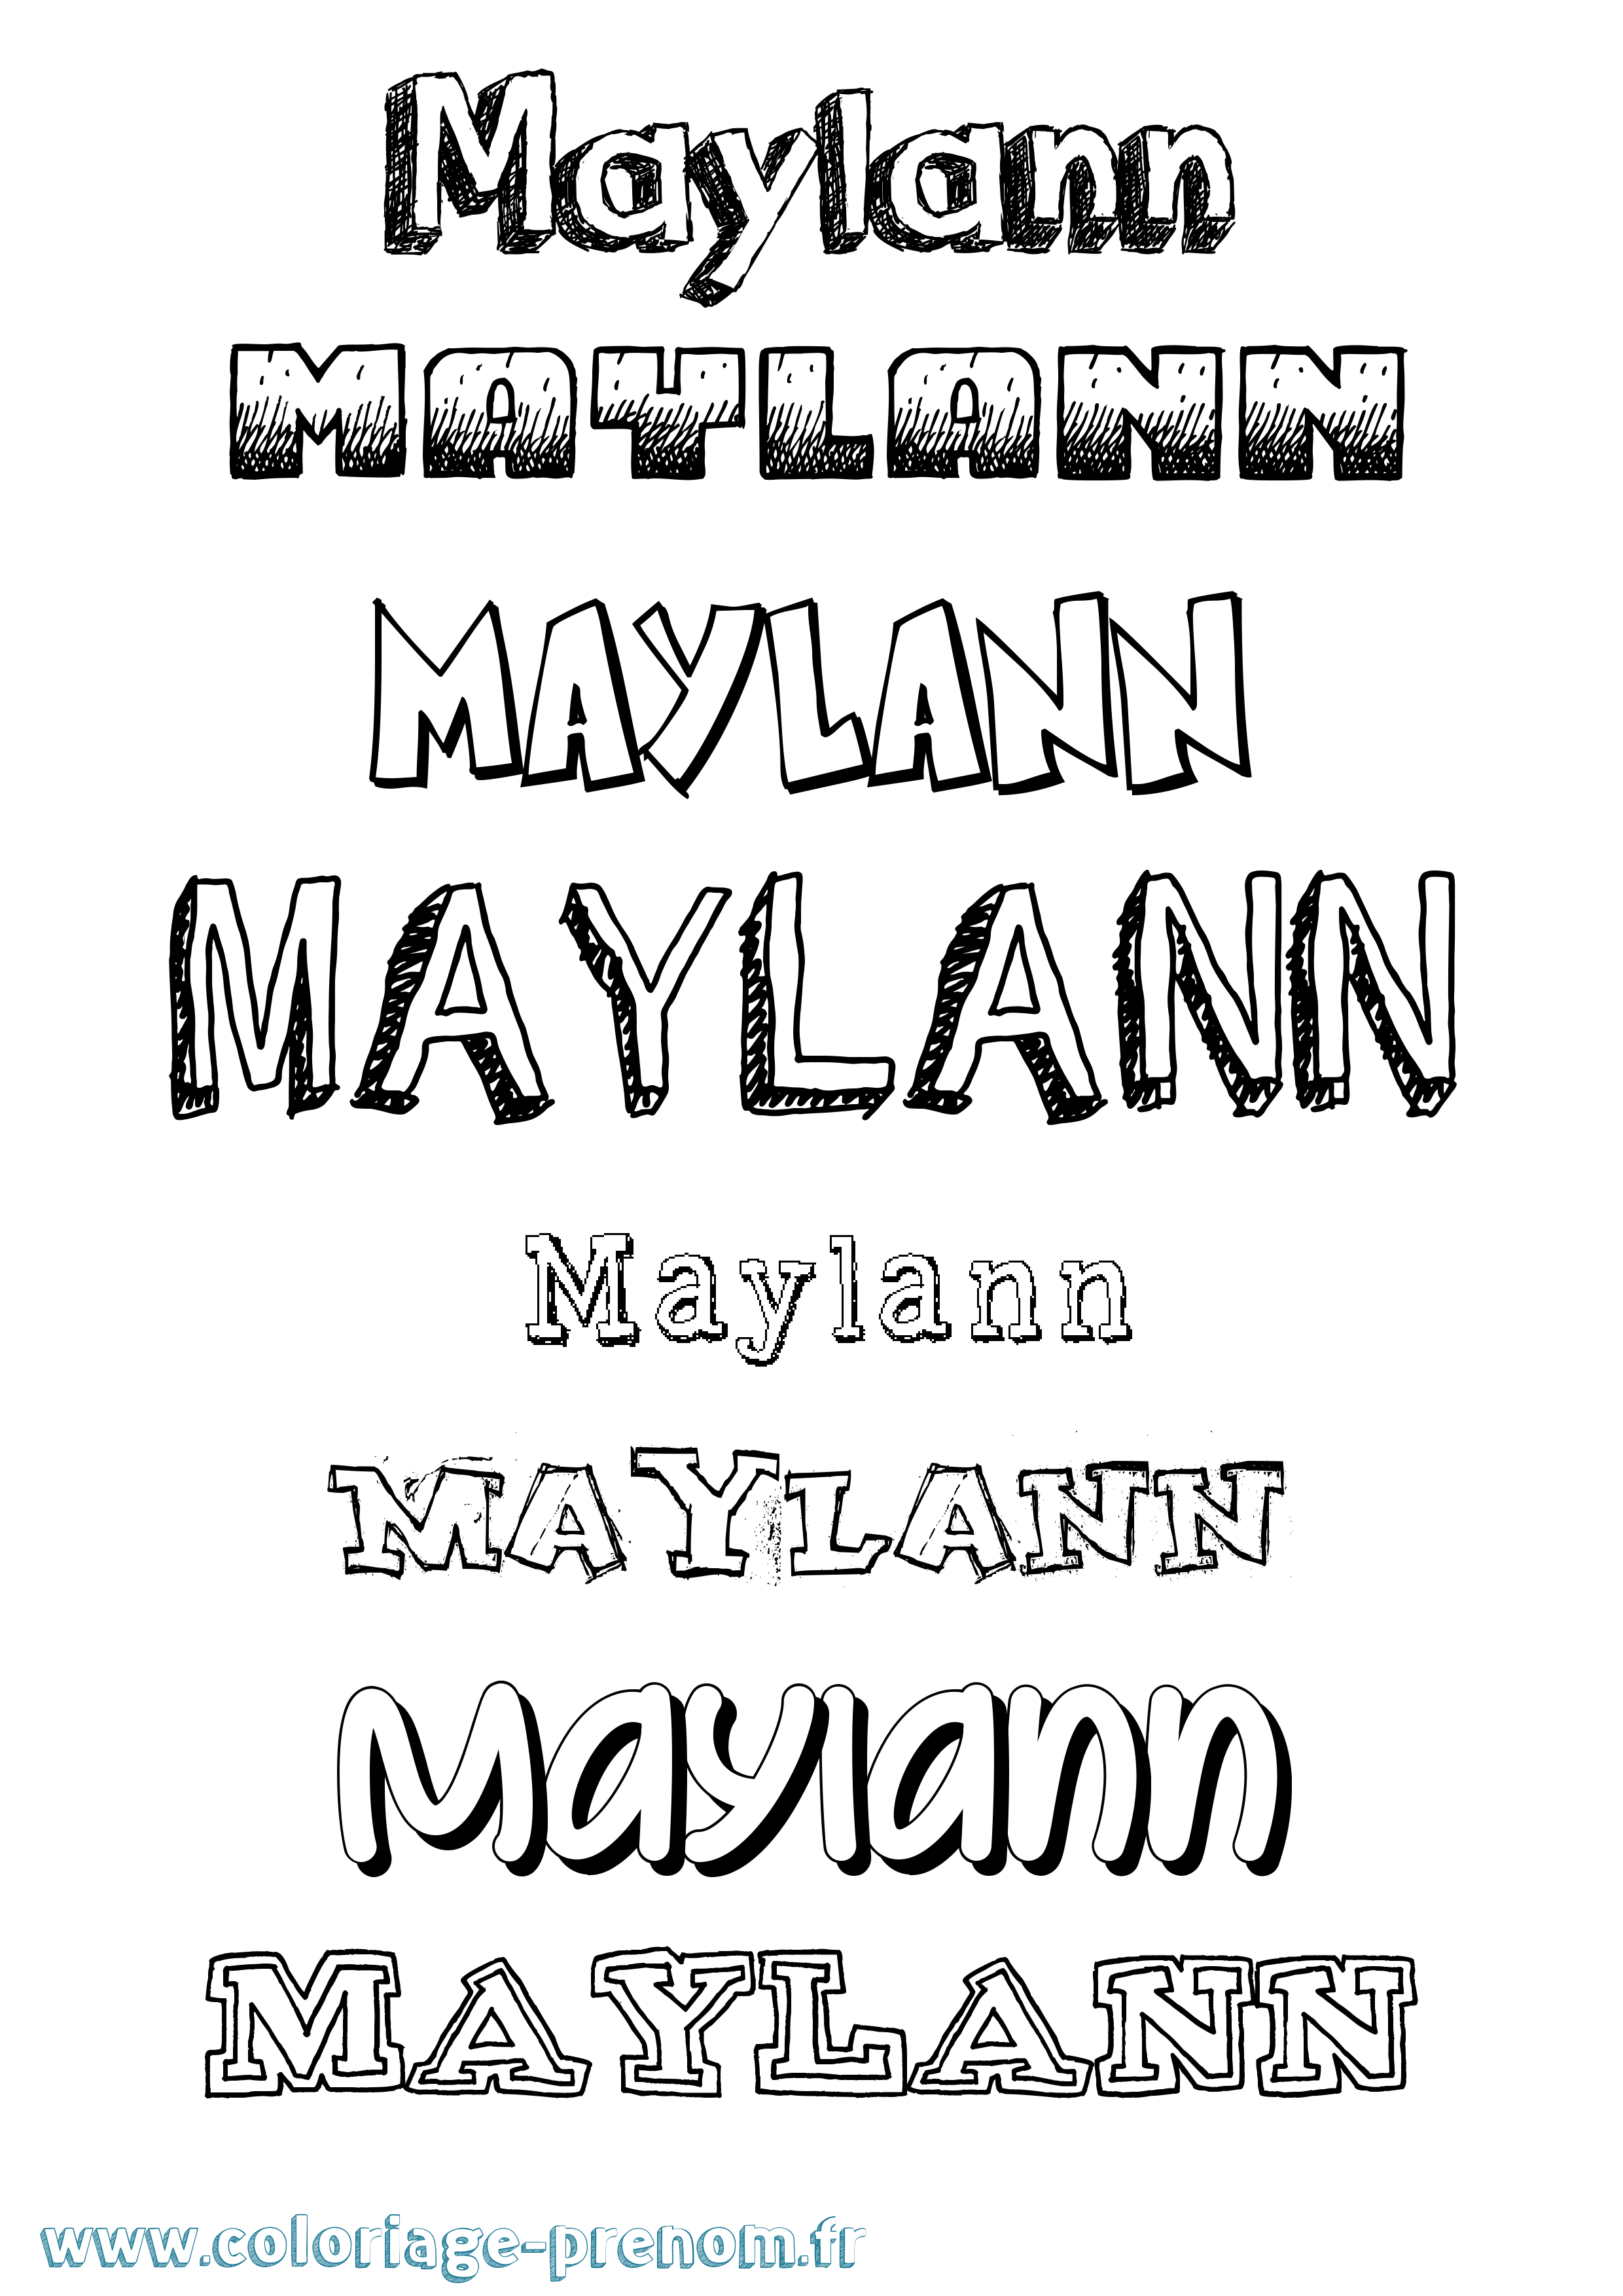 Coloriage prénom Maylann Dessiné